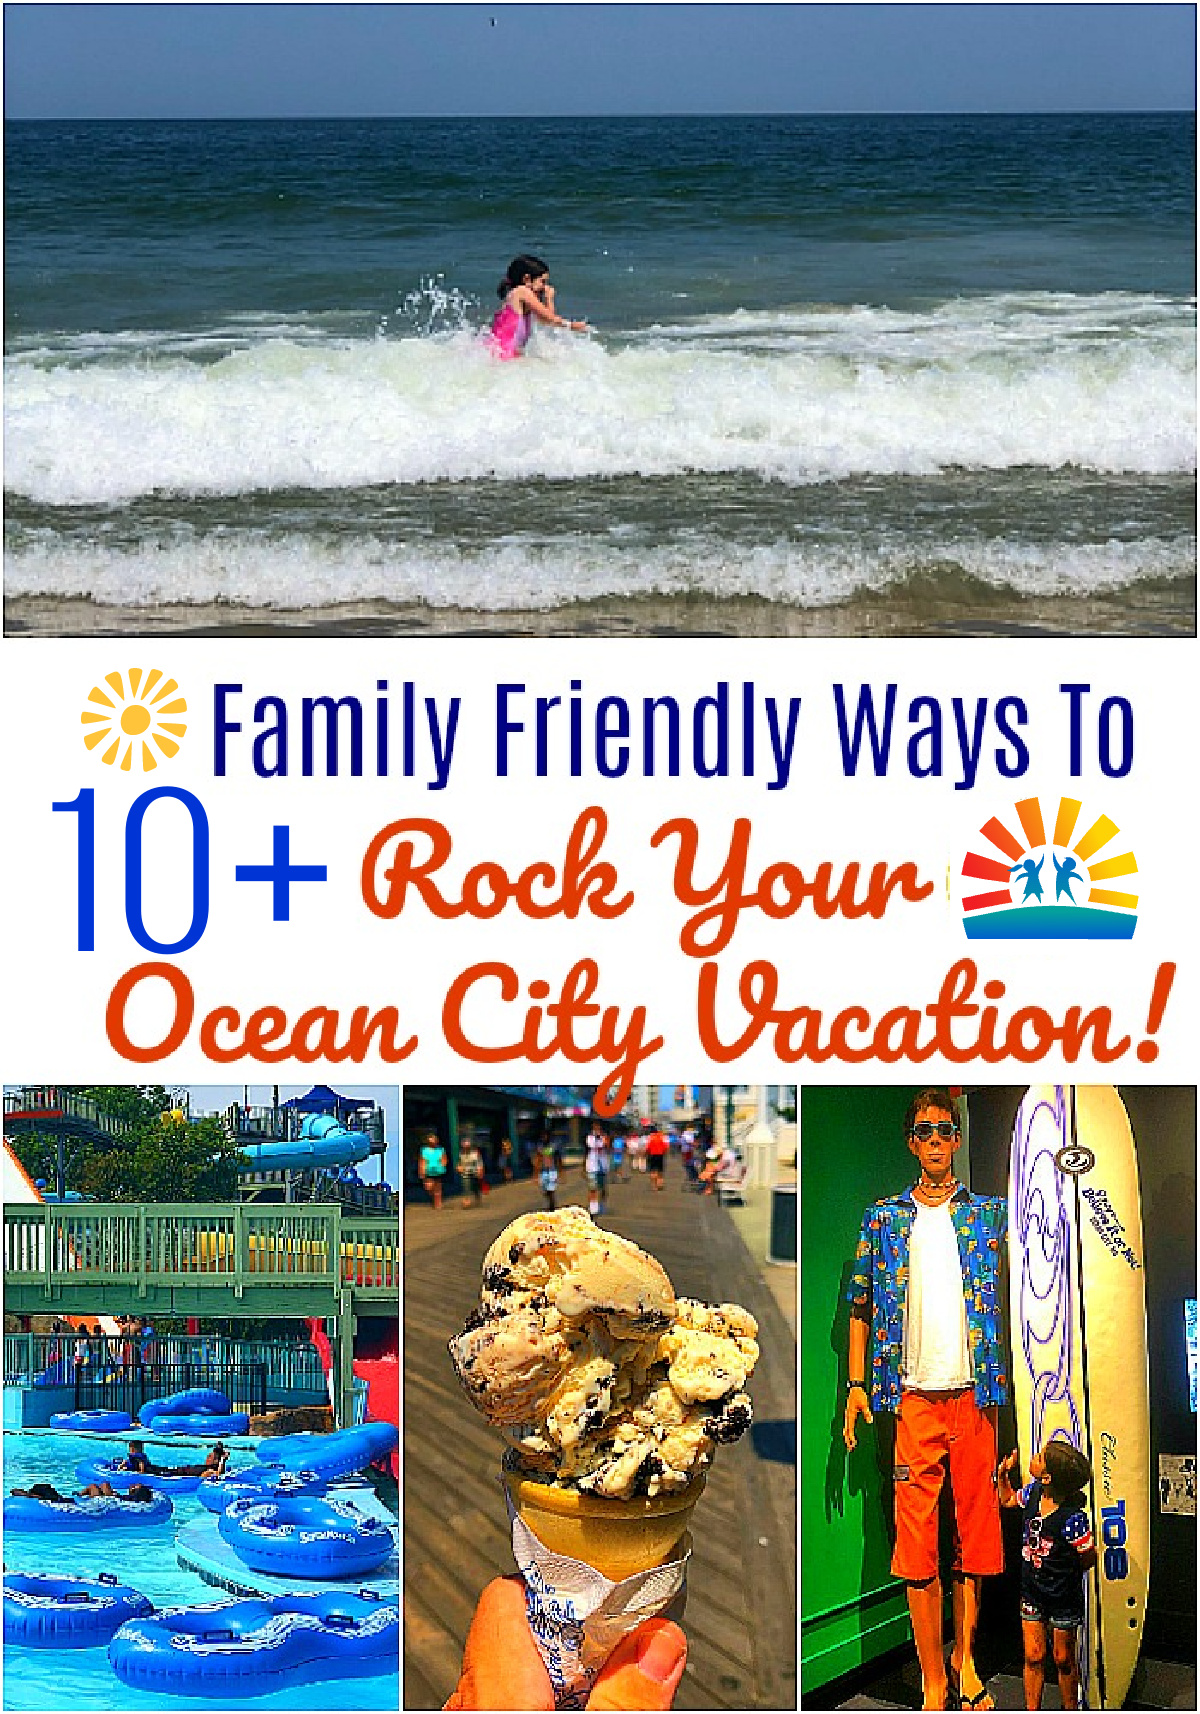 ocean city vacation tips